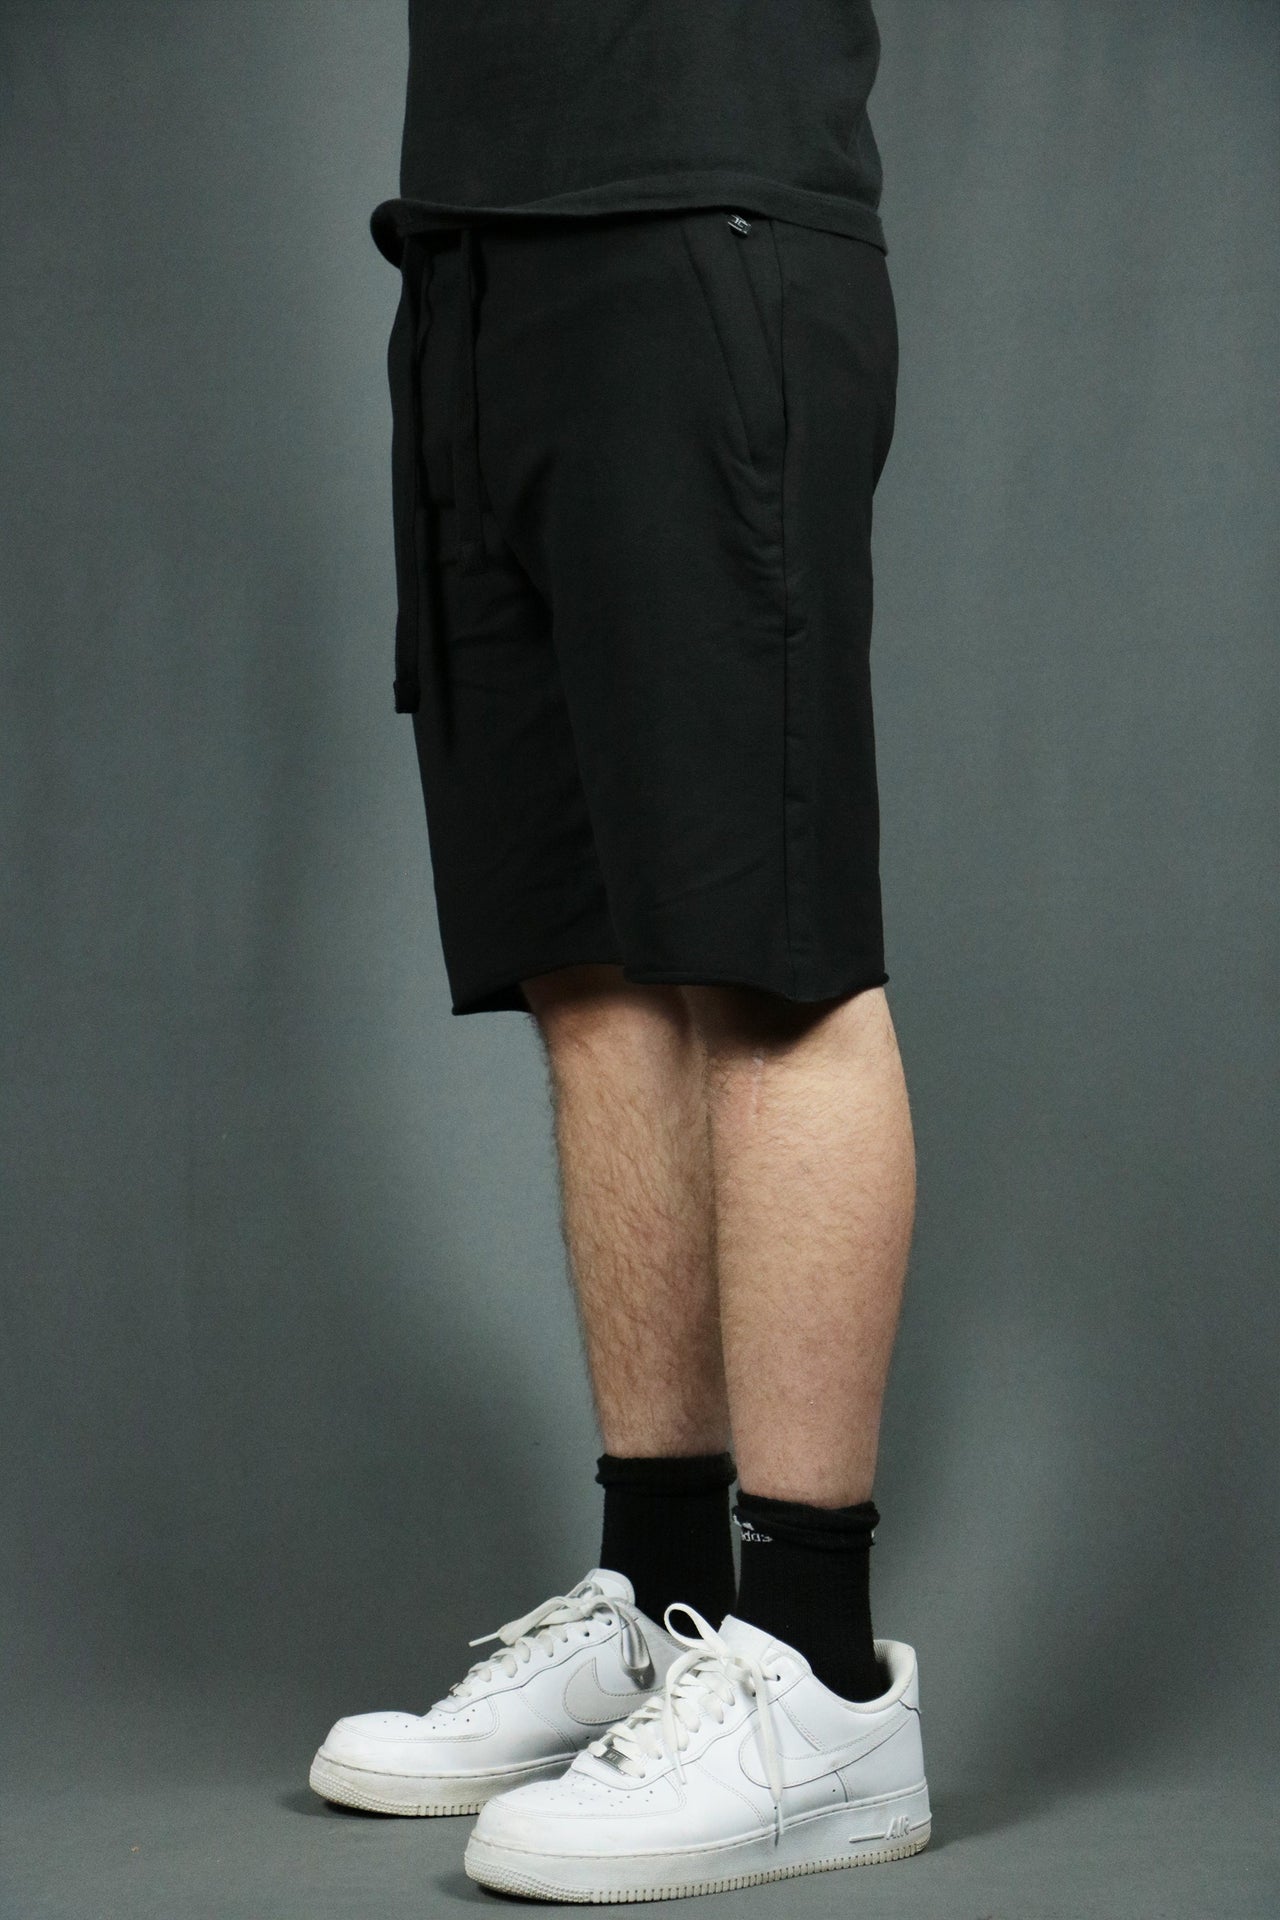 Model wearing the black men's french terry shorts by Jordan Craig.